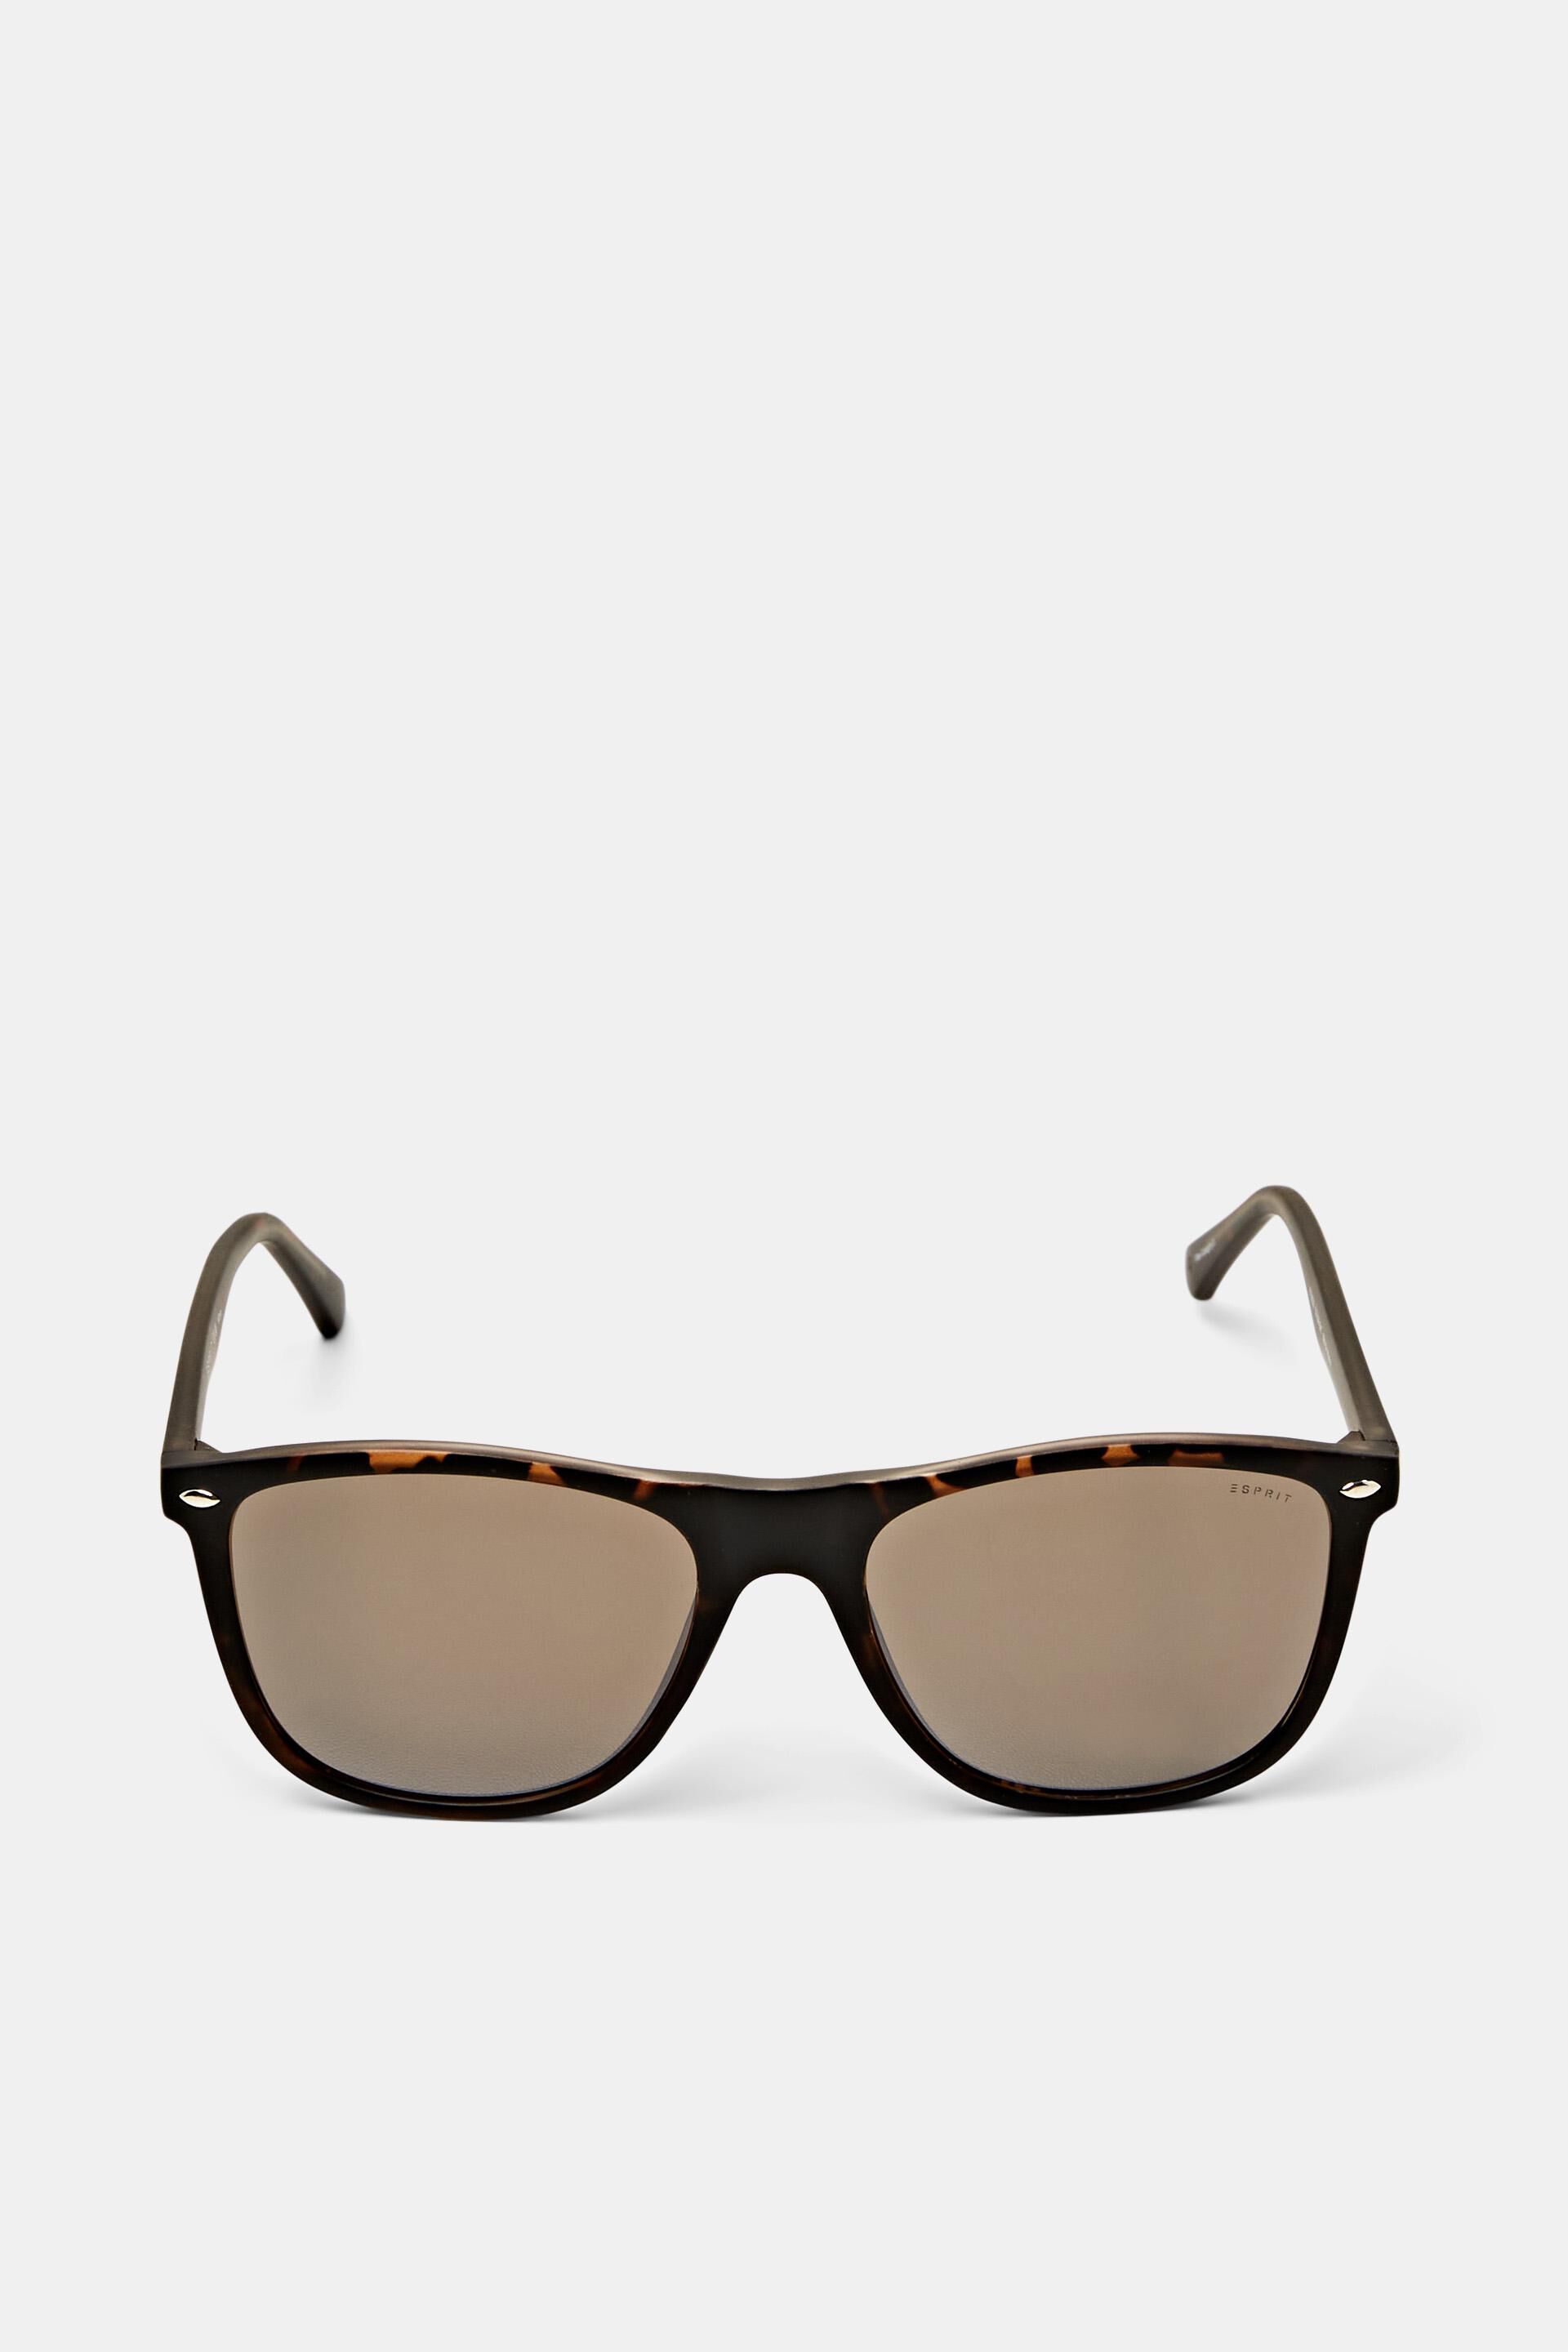 Esprit Square sunglasses frame